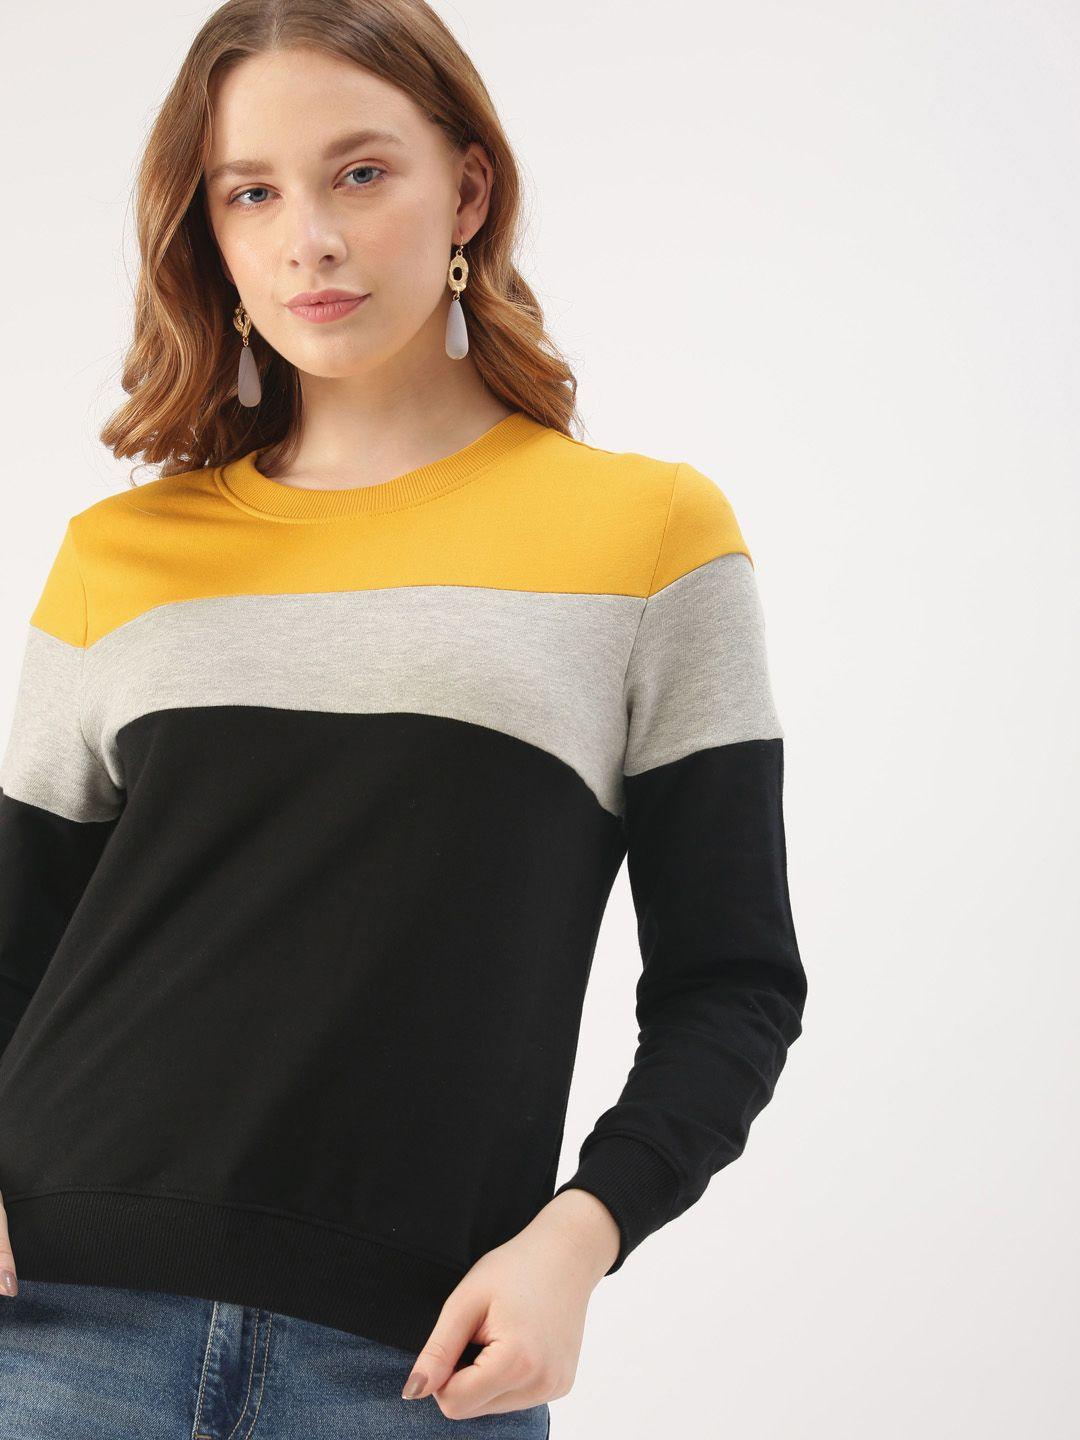 dressberry-women-black-&-mustard-yellow-colourblocked-sweatshirt